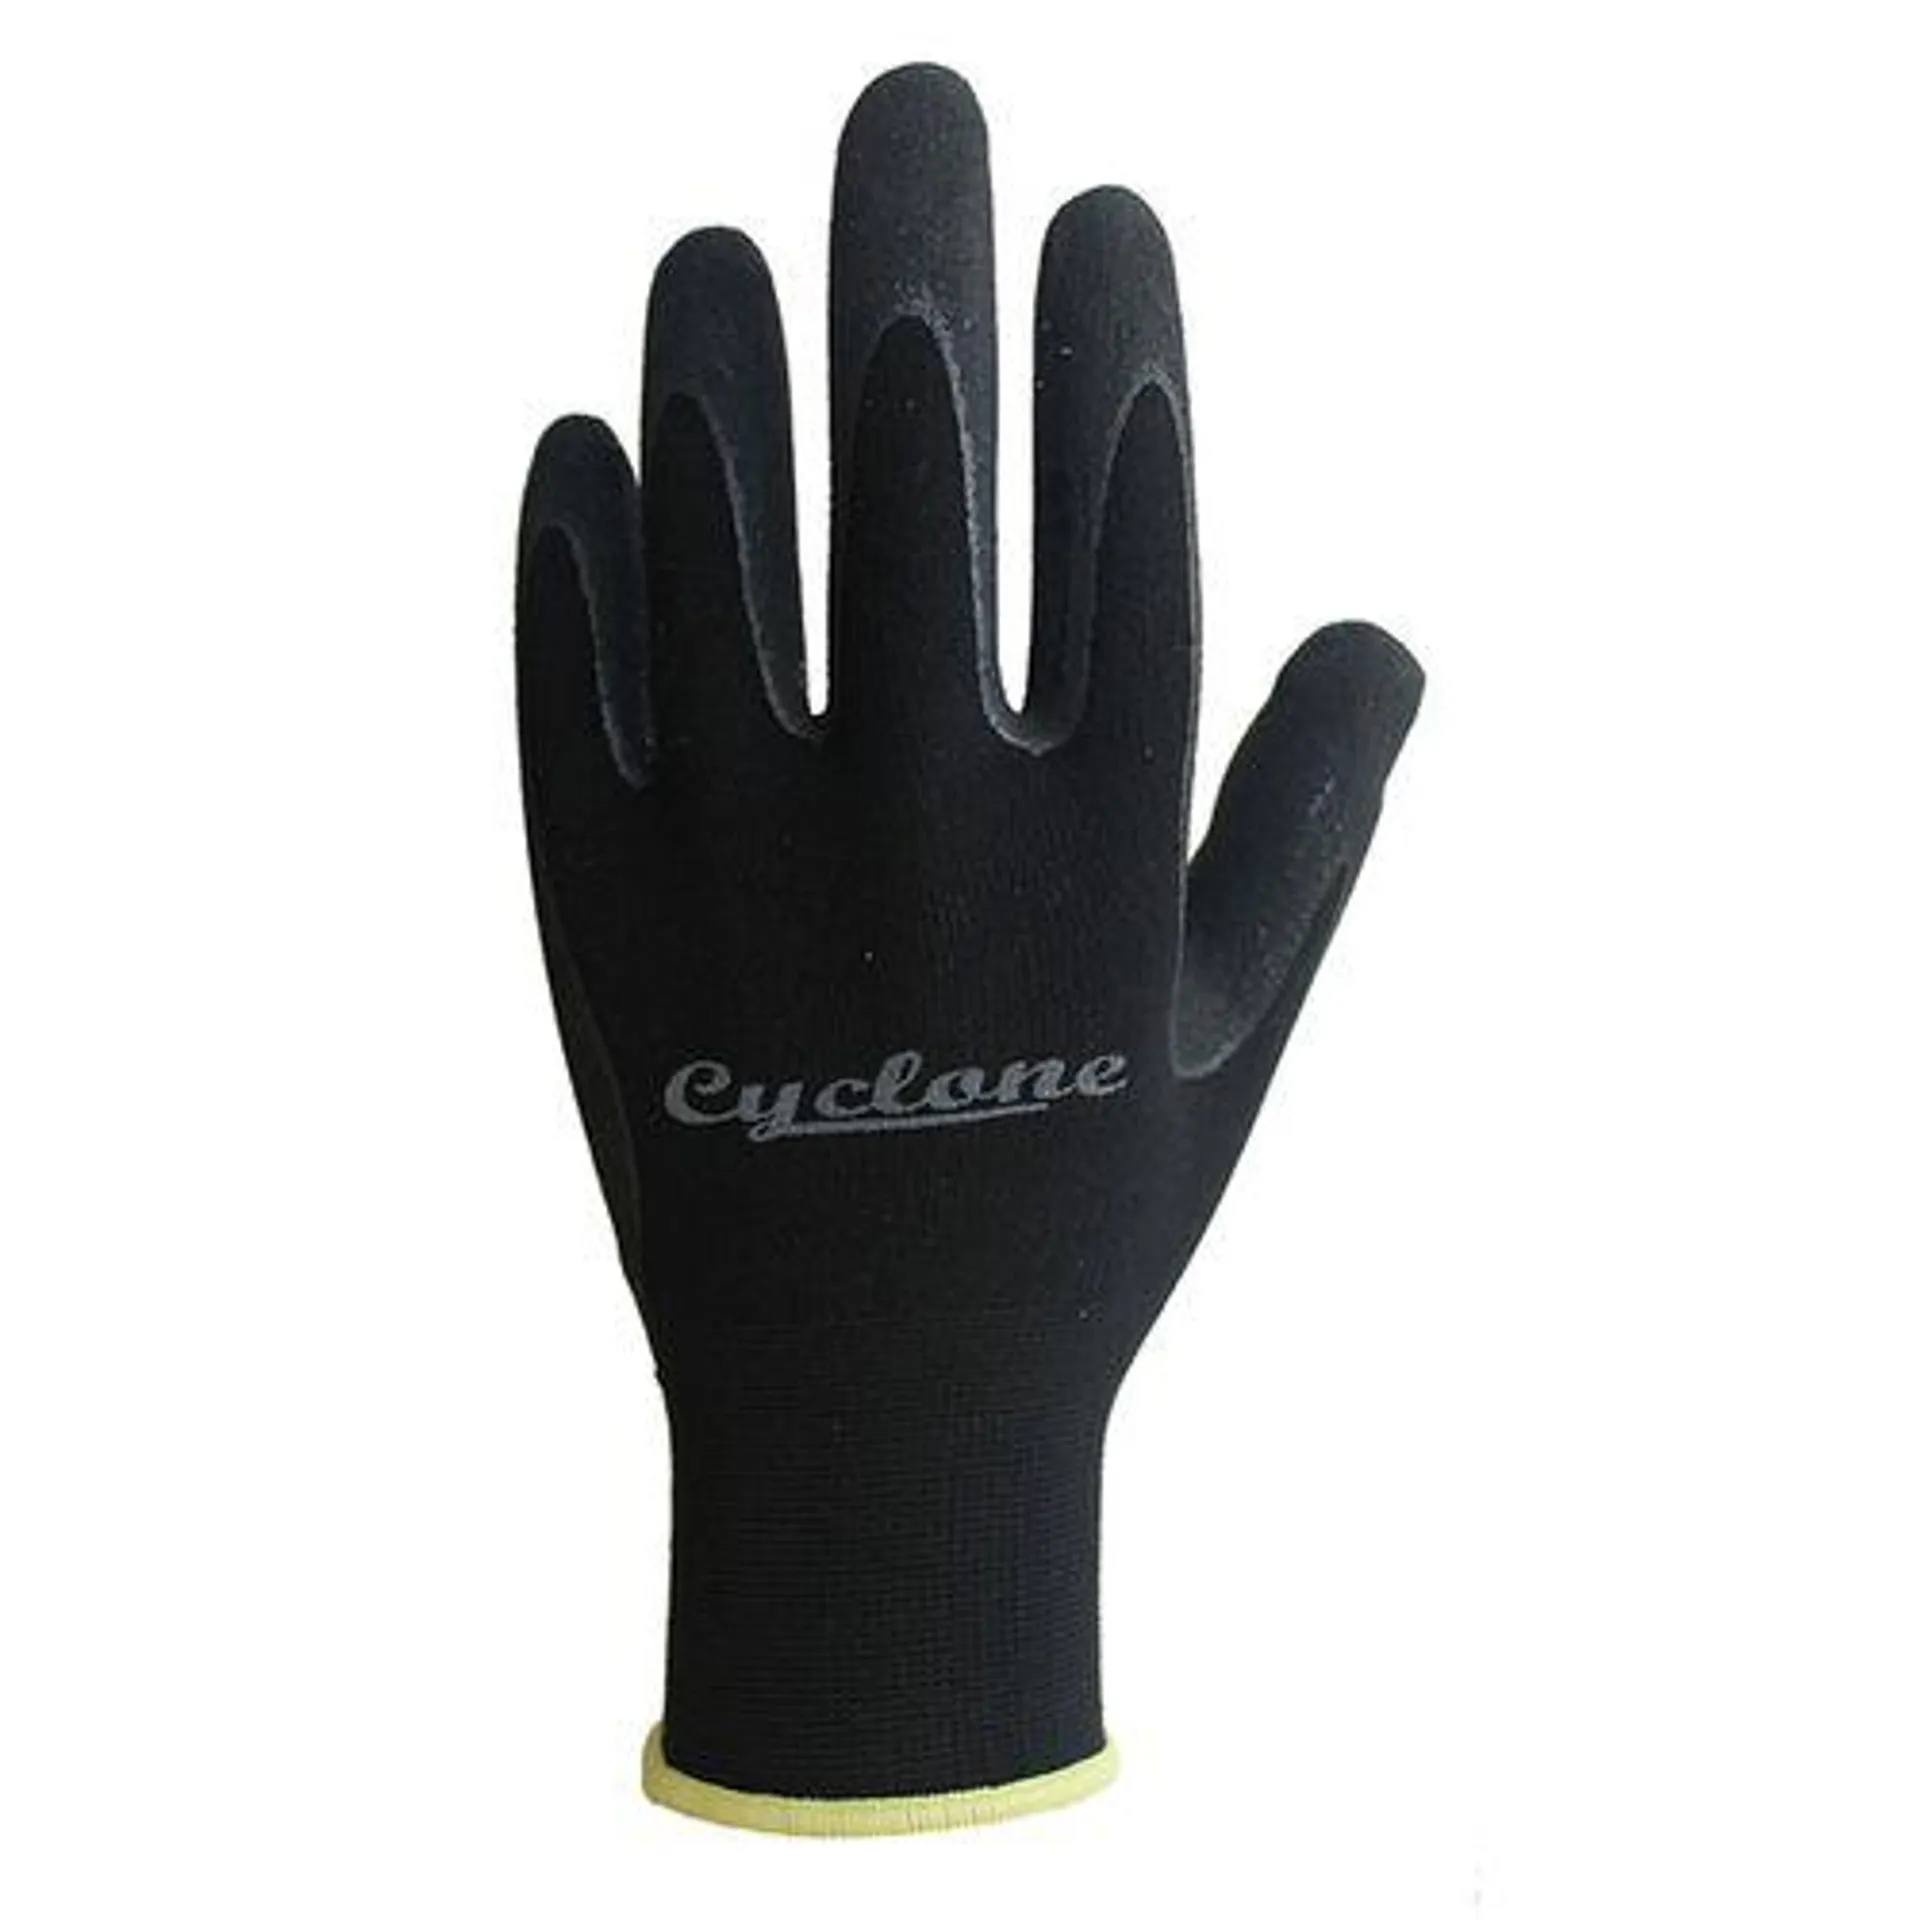 Cyclone Invisigrip Tough Gardening Gloves - X-Large